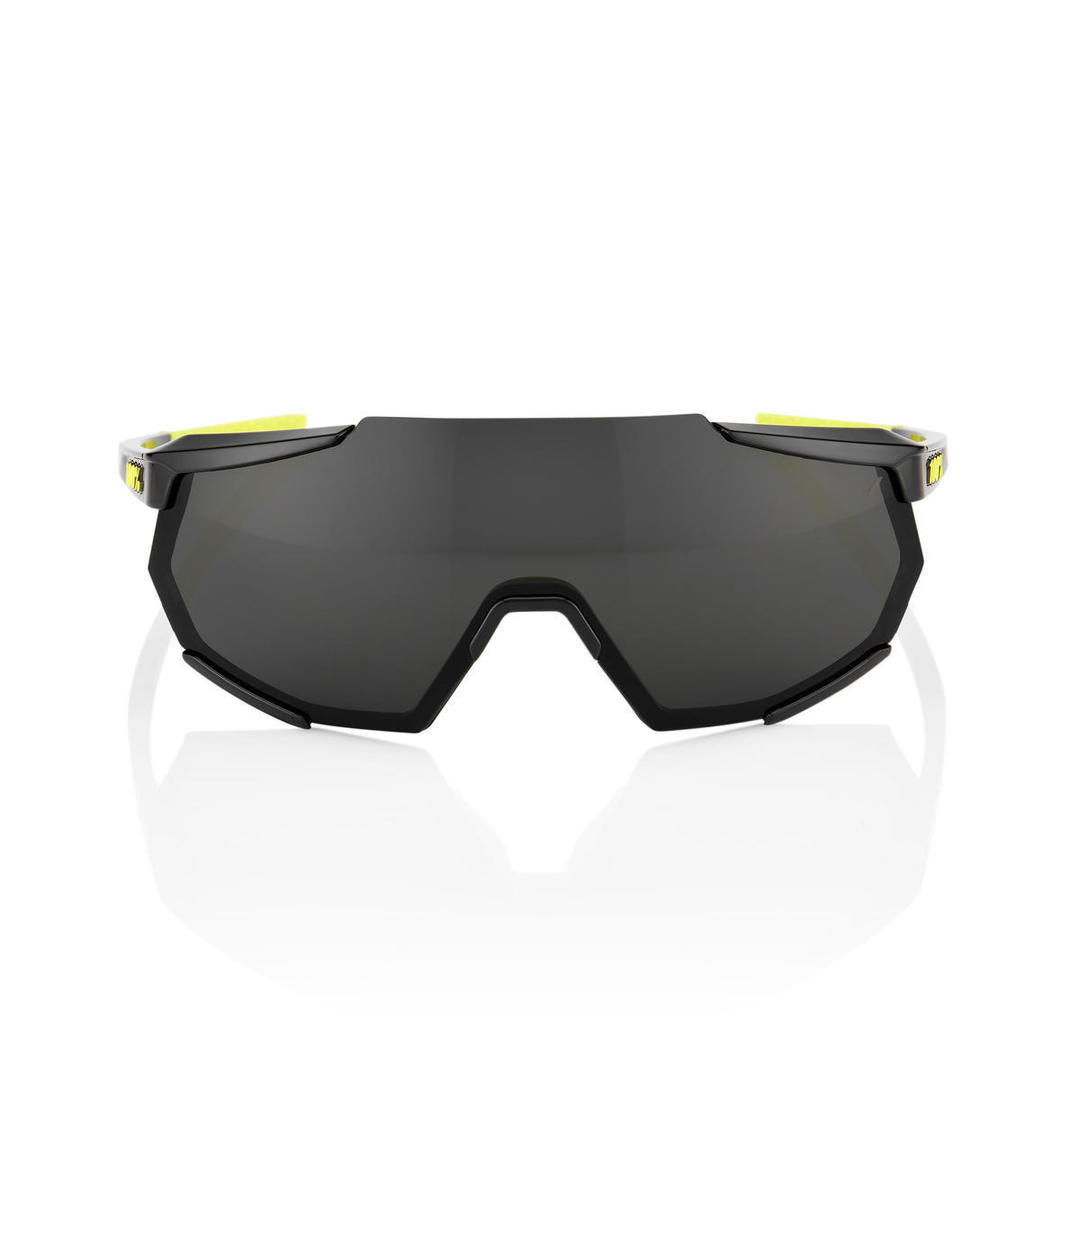 RIDE 100% Sonnenbrillen Racetrap - Gloss Black Smoke Lens